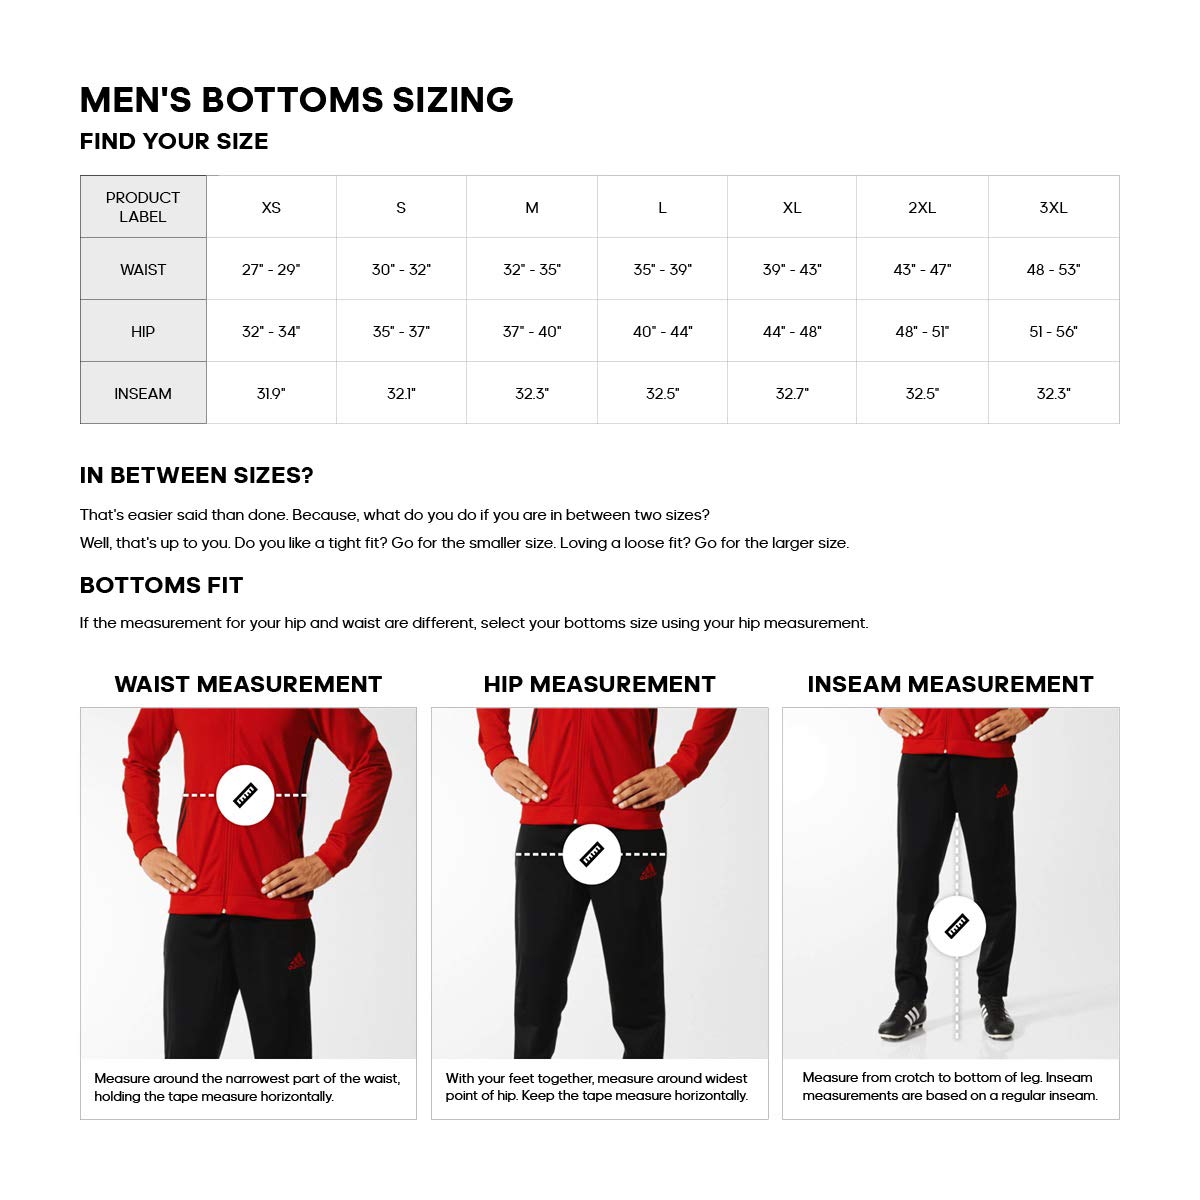 adidas Men's Essentials Warm-up Open Hem 3-stripes Tracksuit Pants